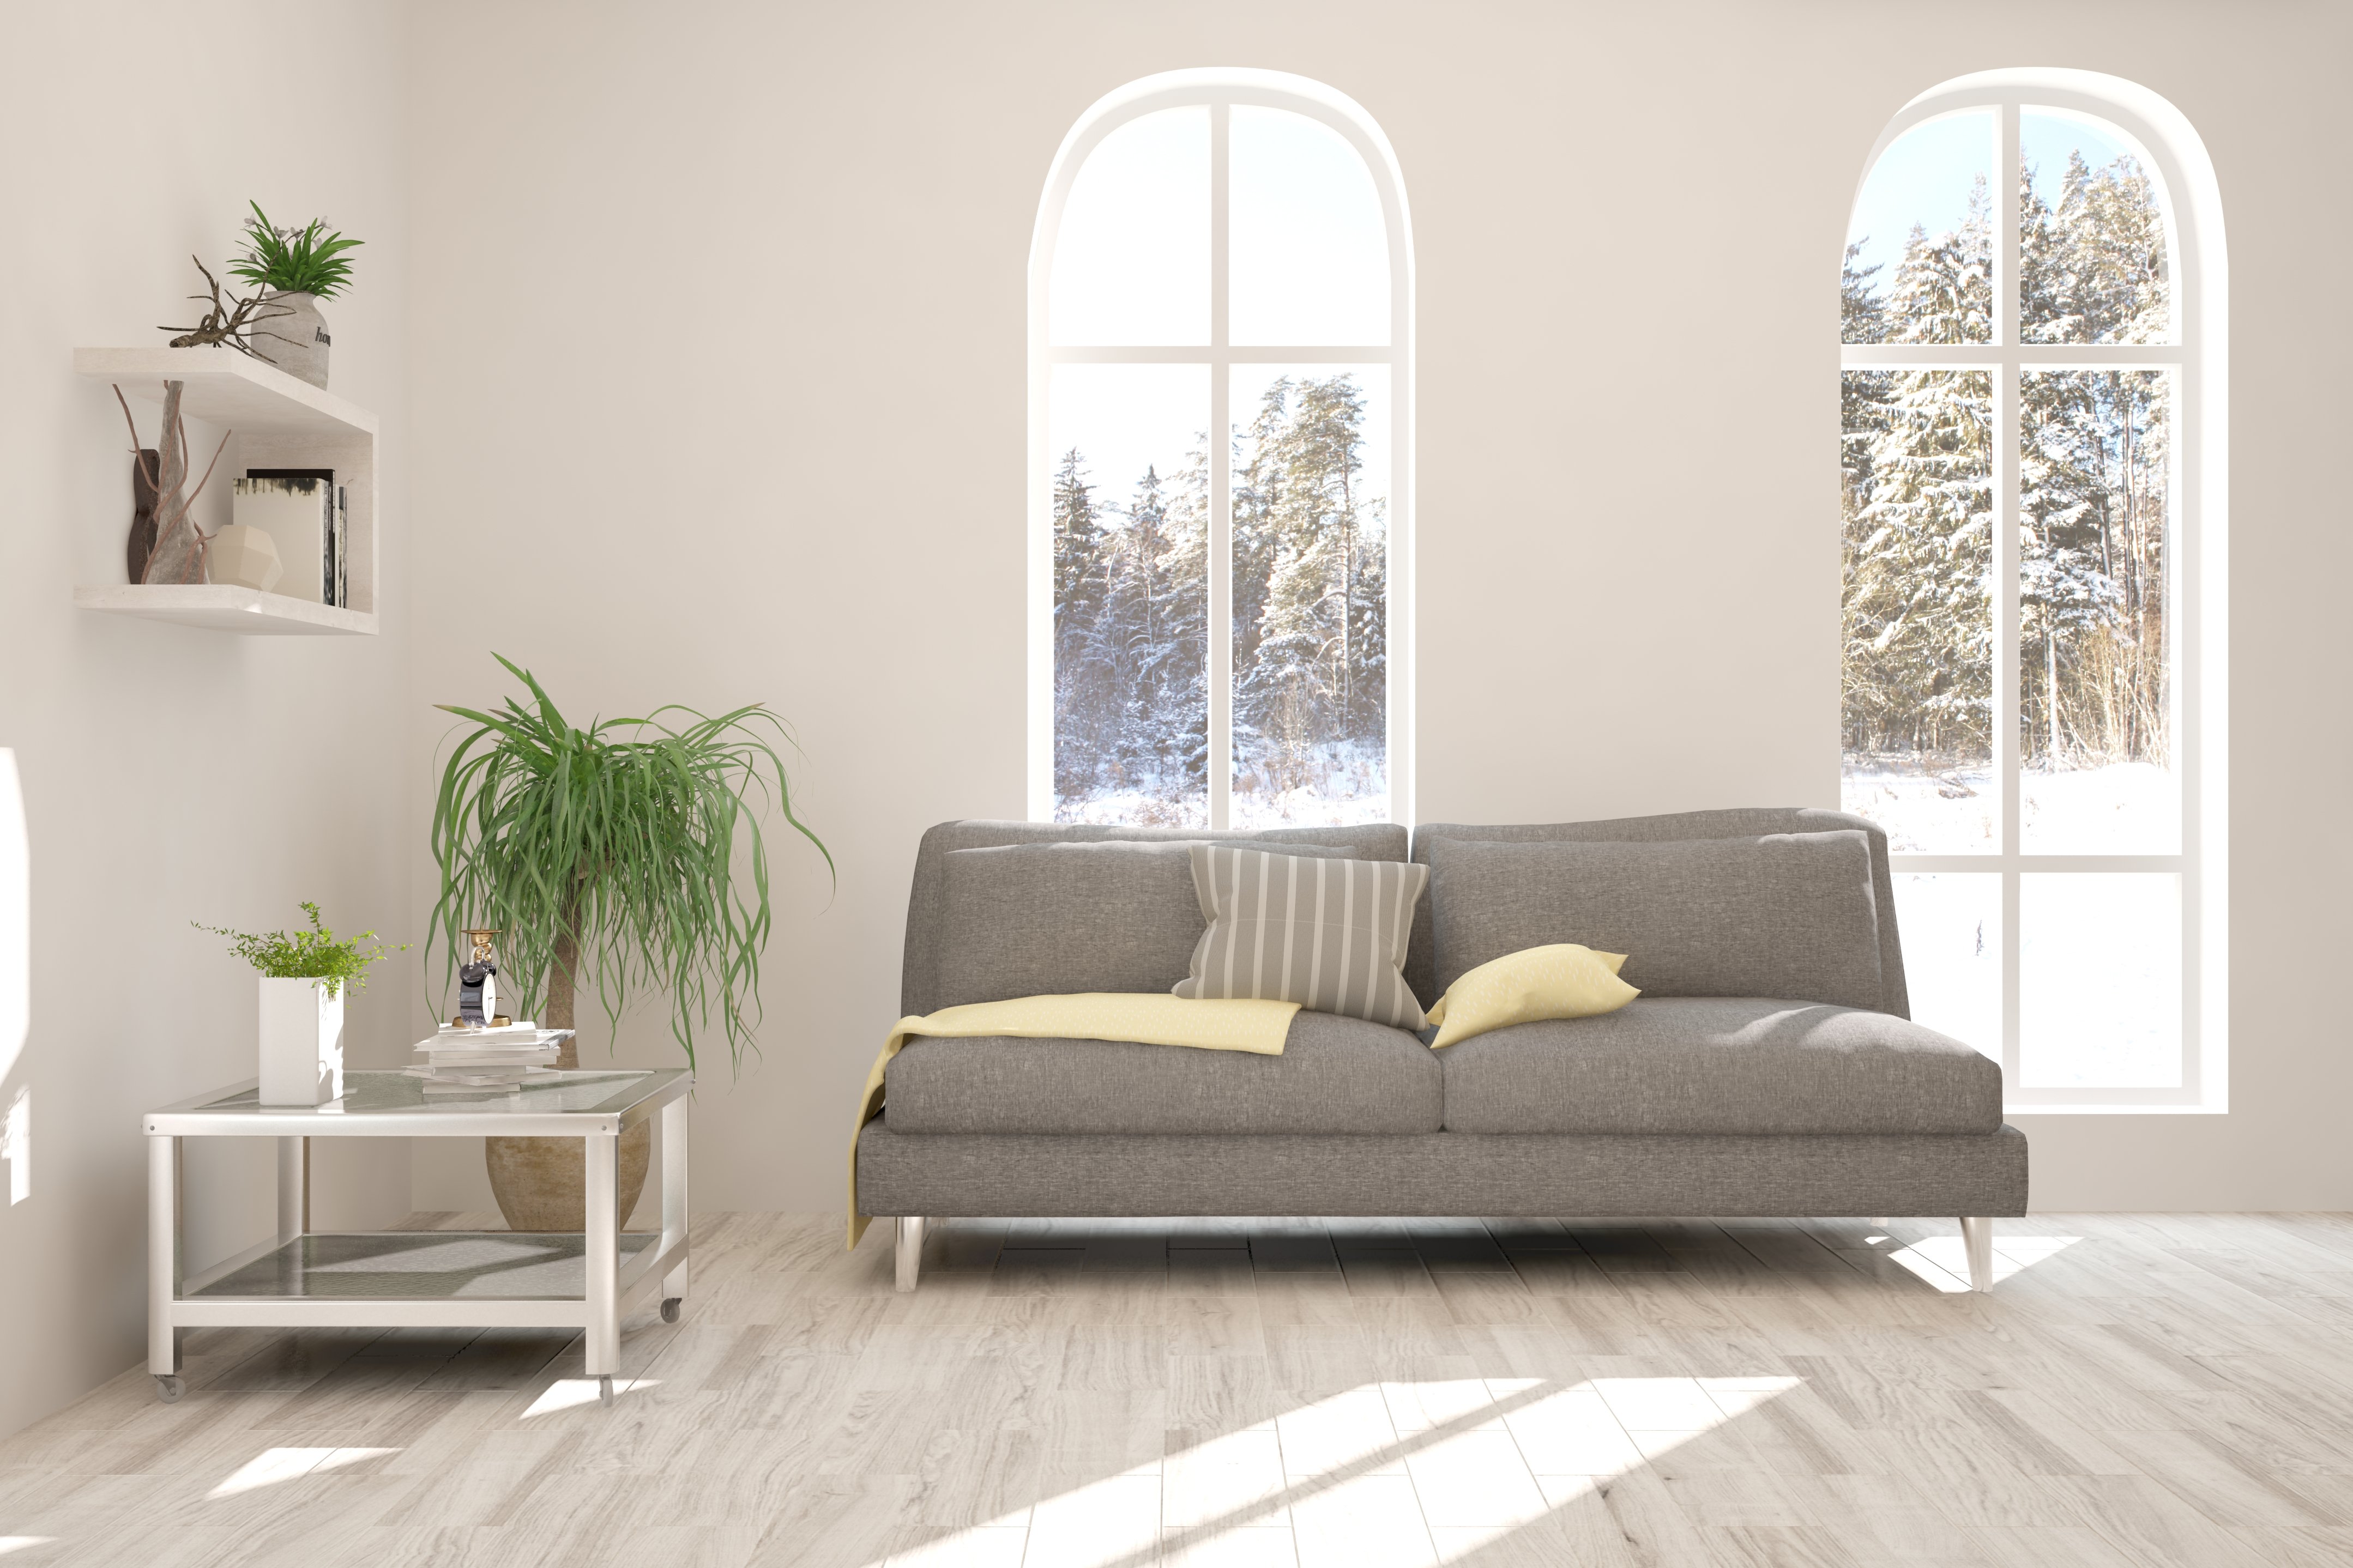 Radiant floor heating in a modern living room